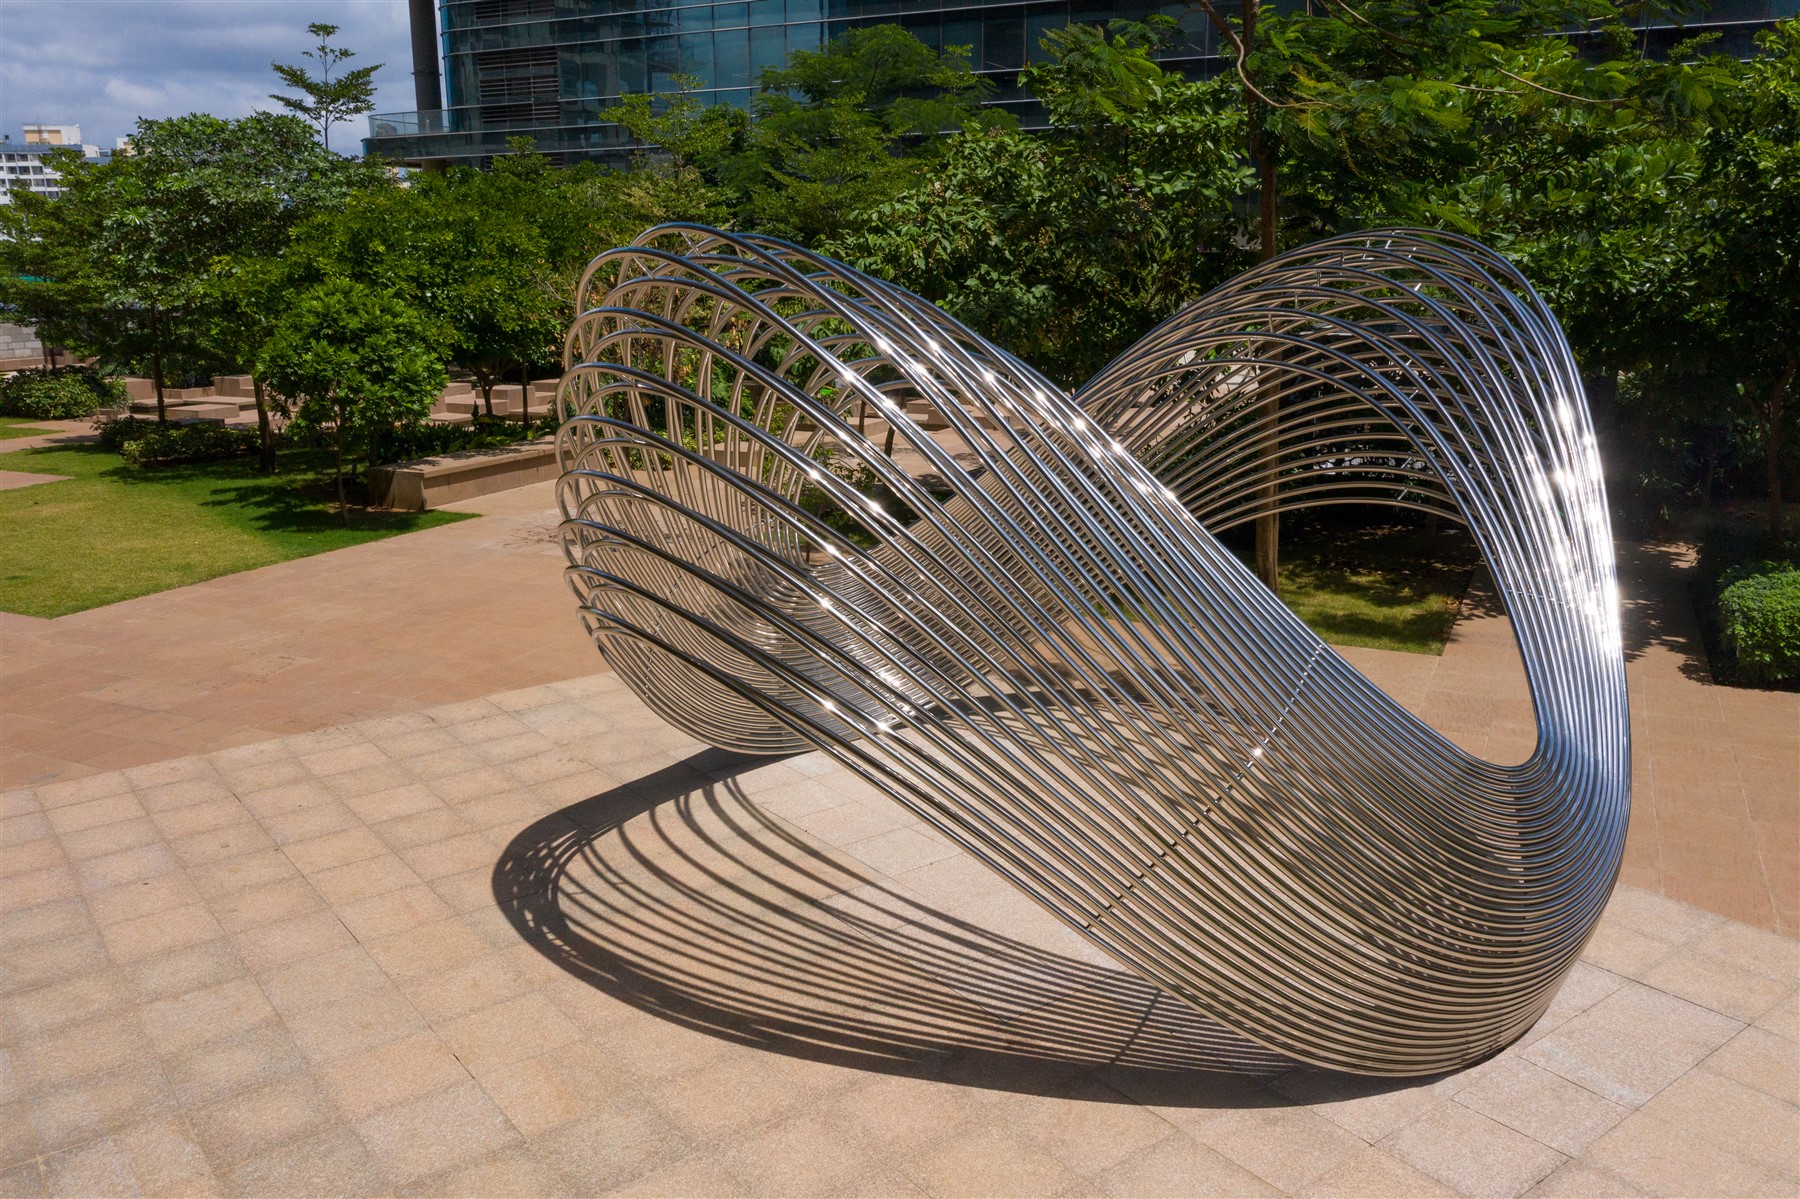 Billow Stainless Steel Sculpture In Garden